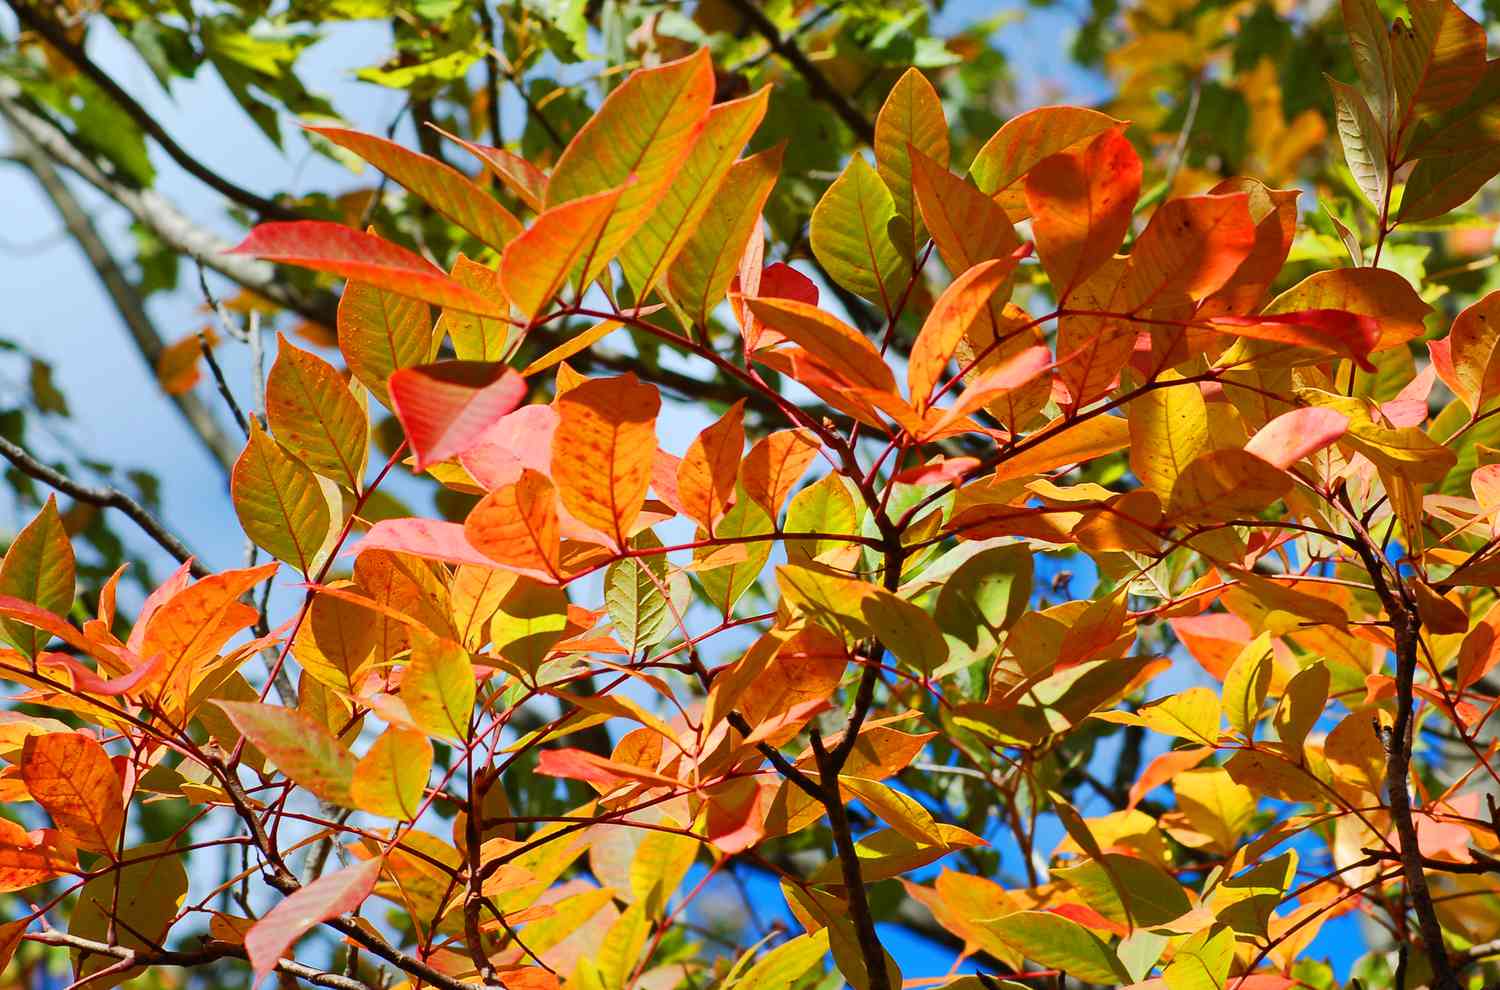 Fall foliage of poison sumac shrubs.